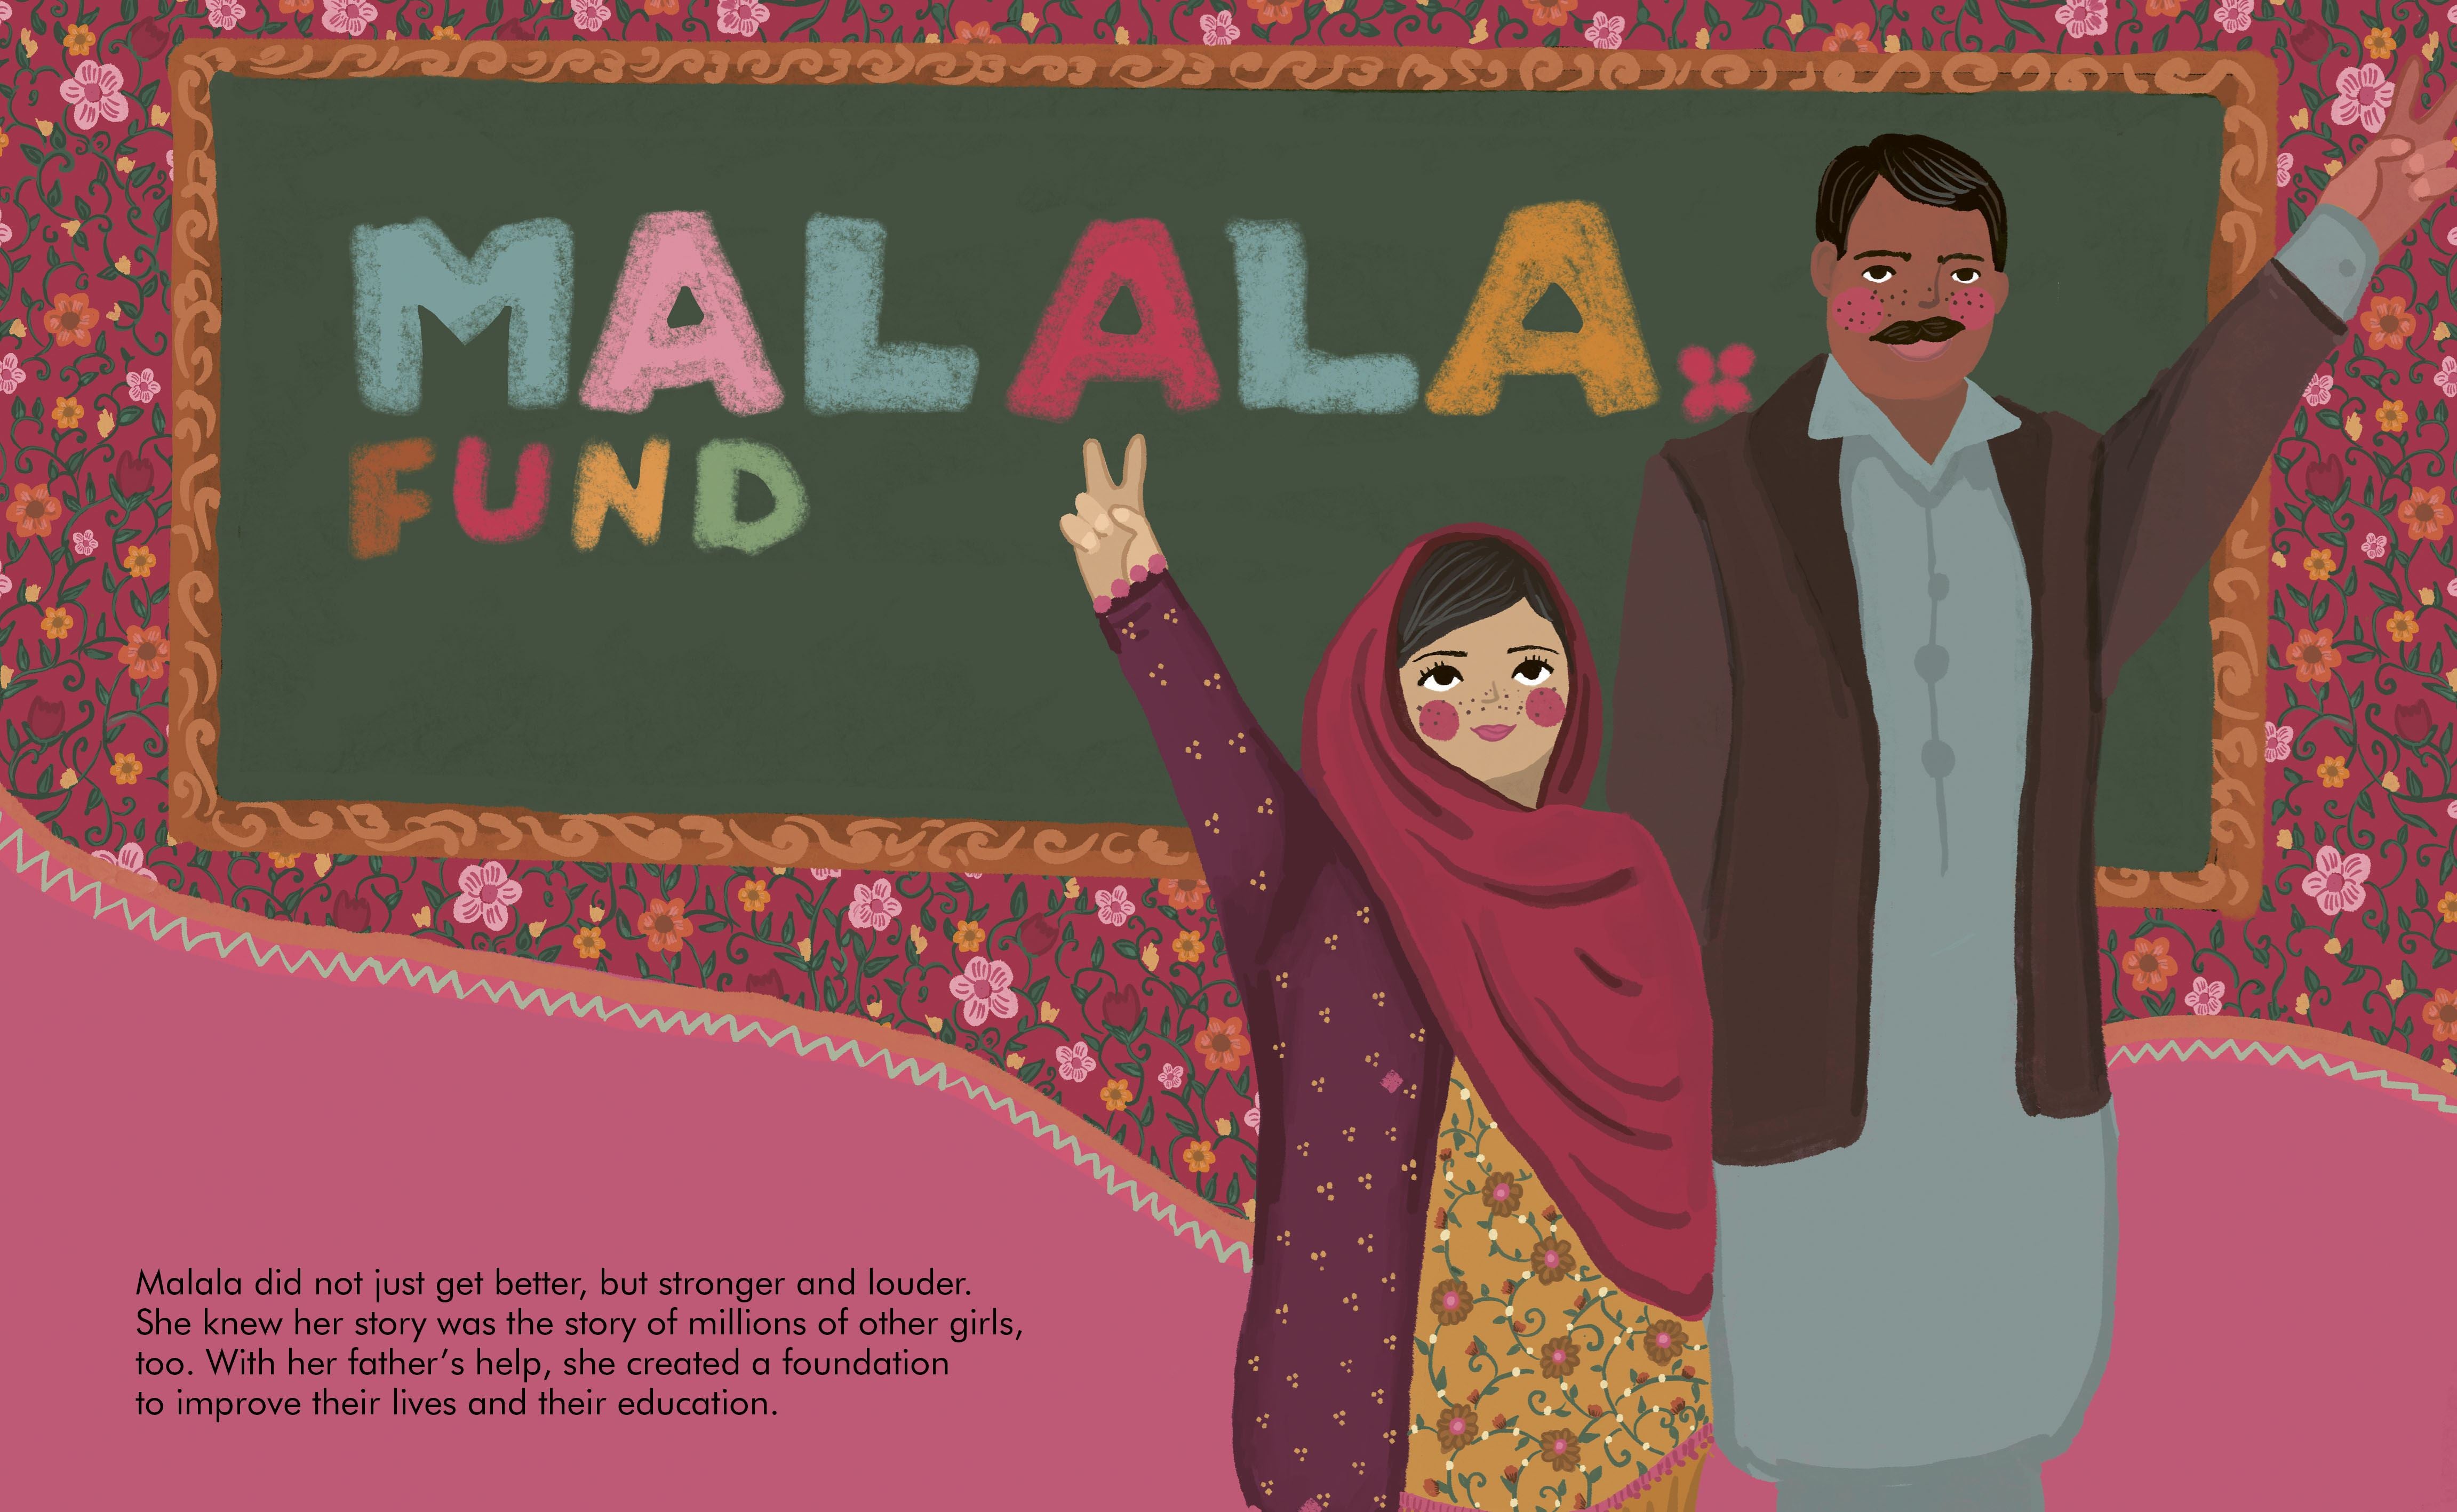 Little People, Big Dreams: Malala Yousafzai